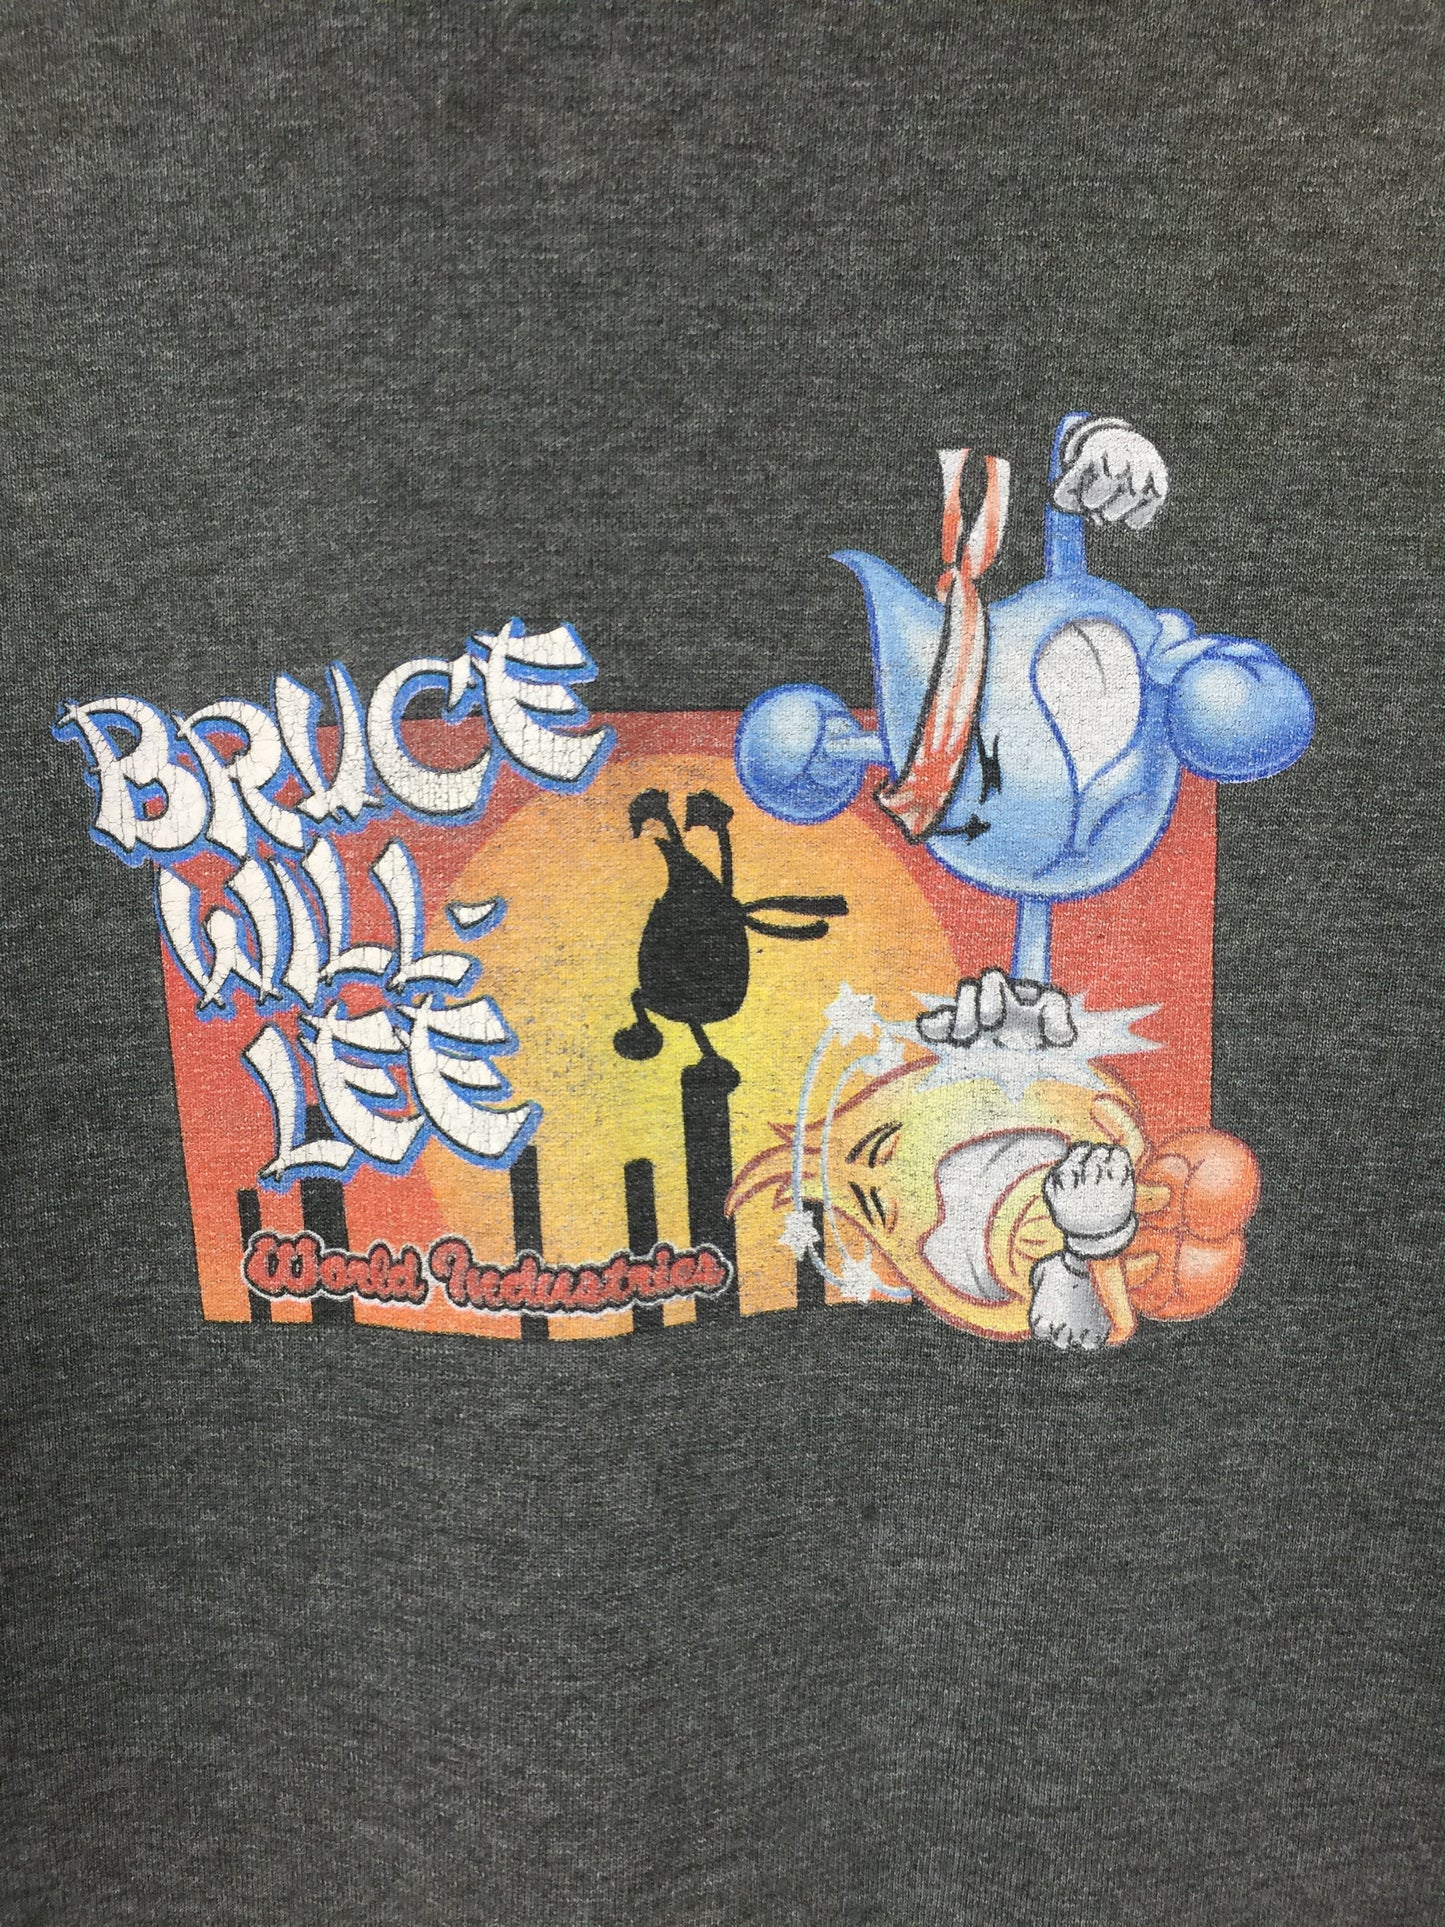 World Industries skateboard "Bruce Will-Lee" T-shirt